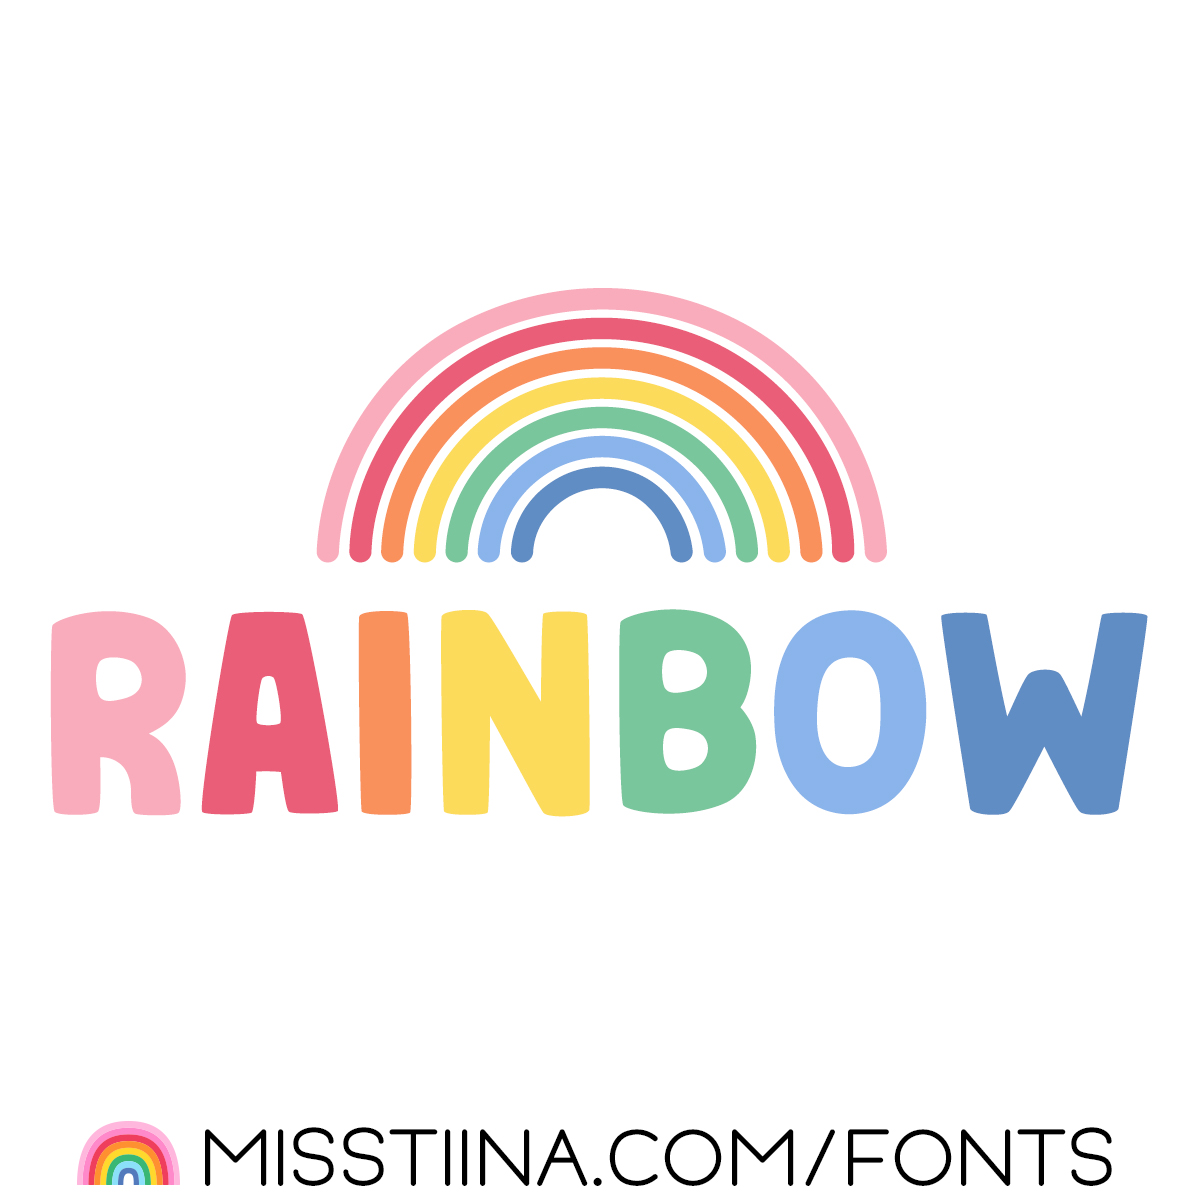 MTF Rainbow SVG Color Font